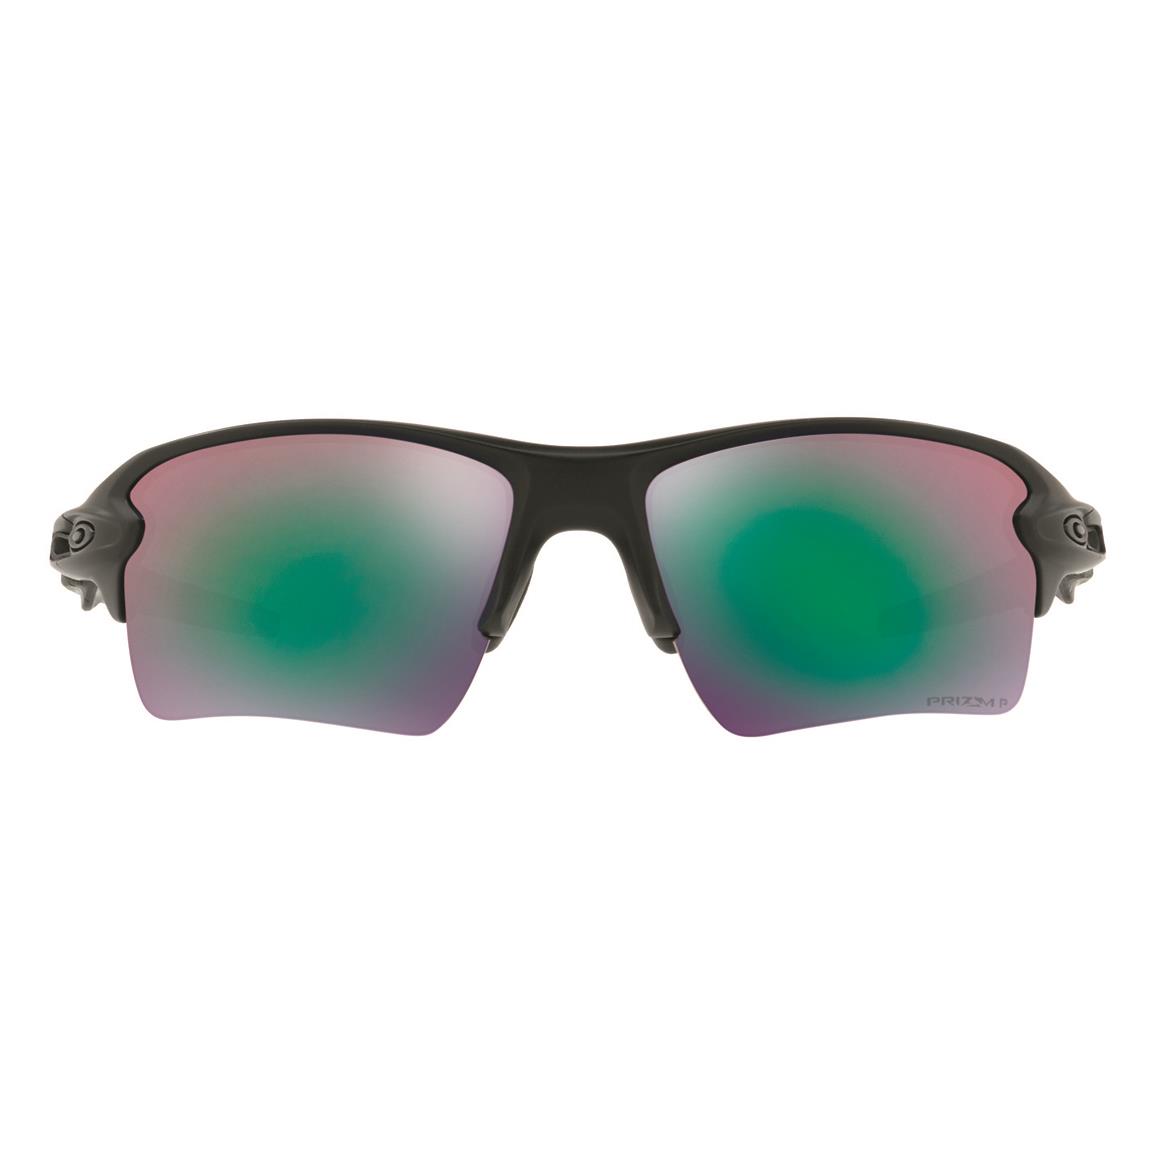 Oakley Standard Issue Flak 2.0 XL Sunglasses with Prizm Polarized Lenses, Matte Black/prizm Maritime Polarized